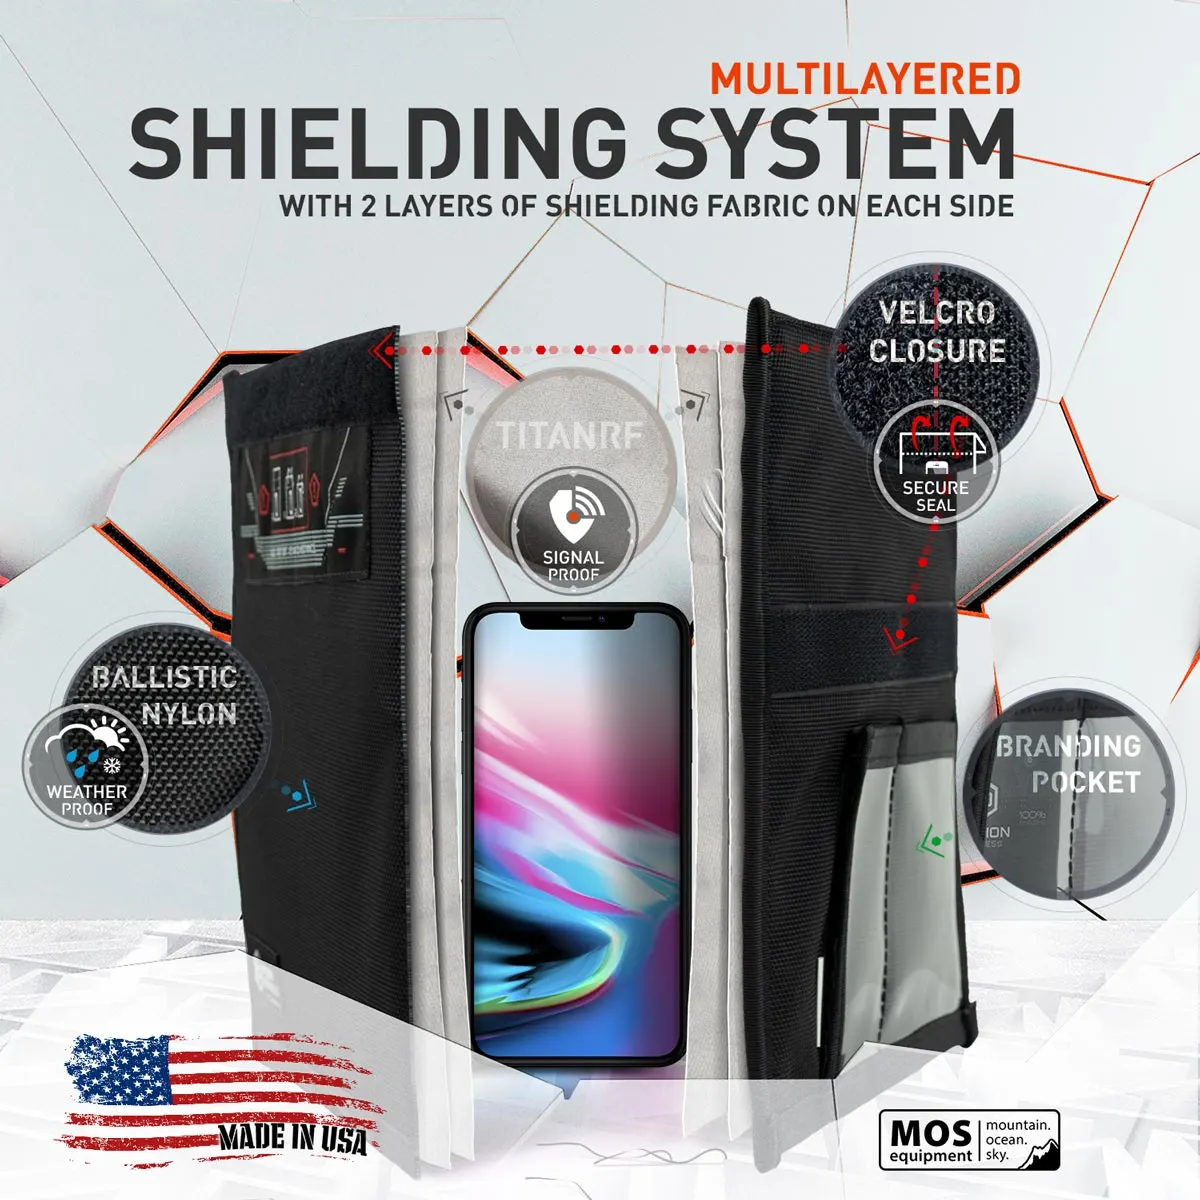 Multilayer-shielding-system